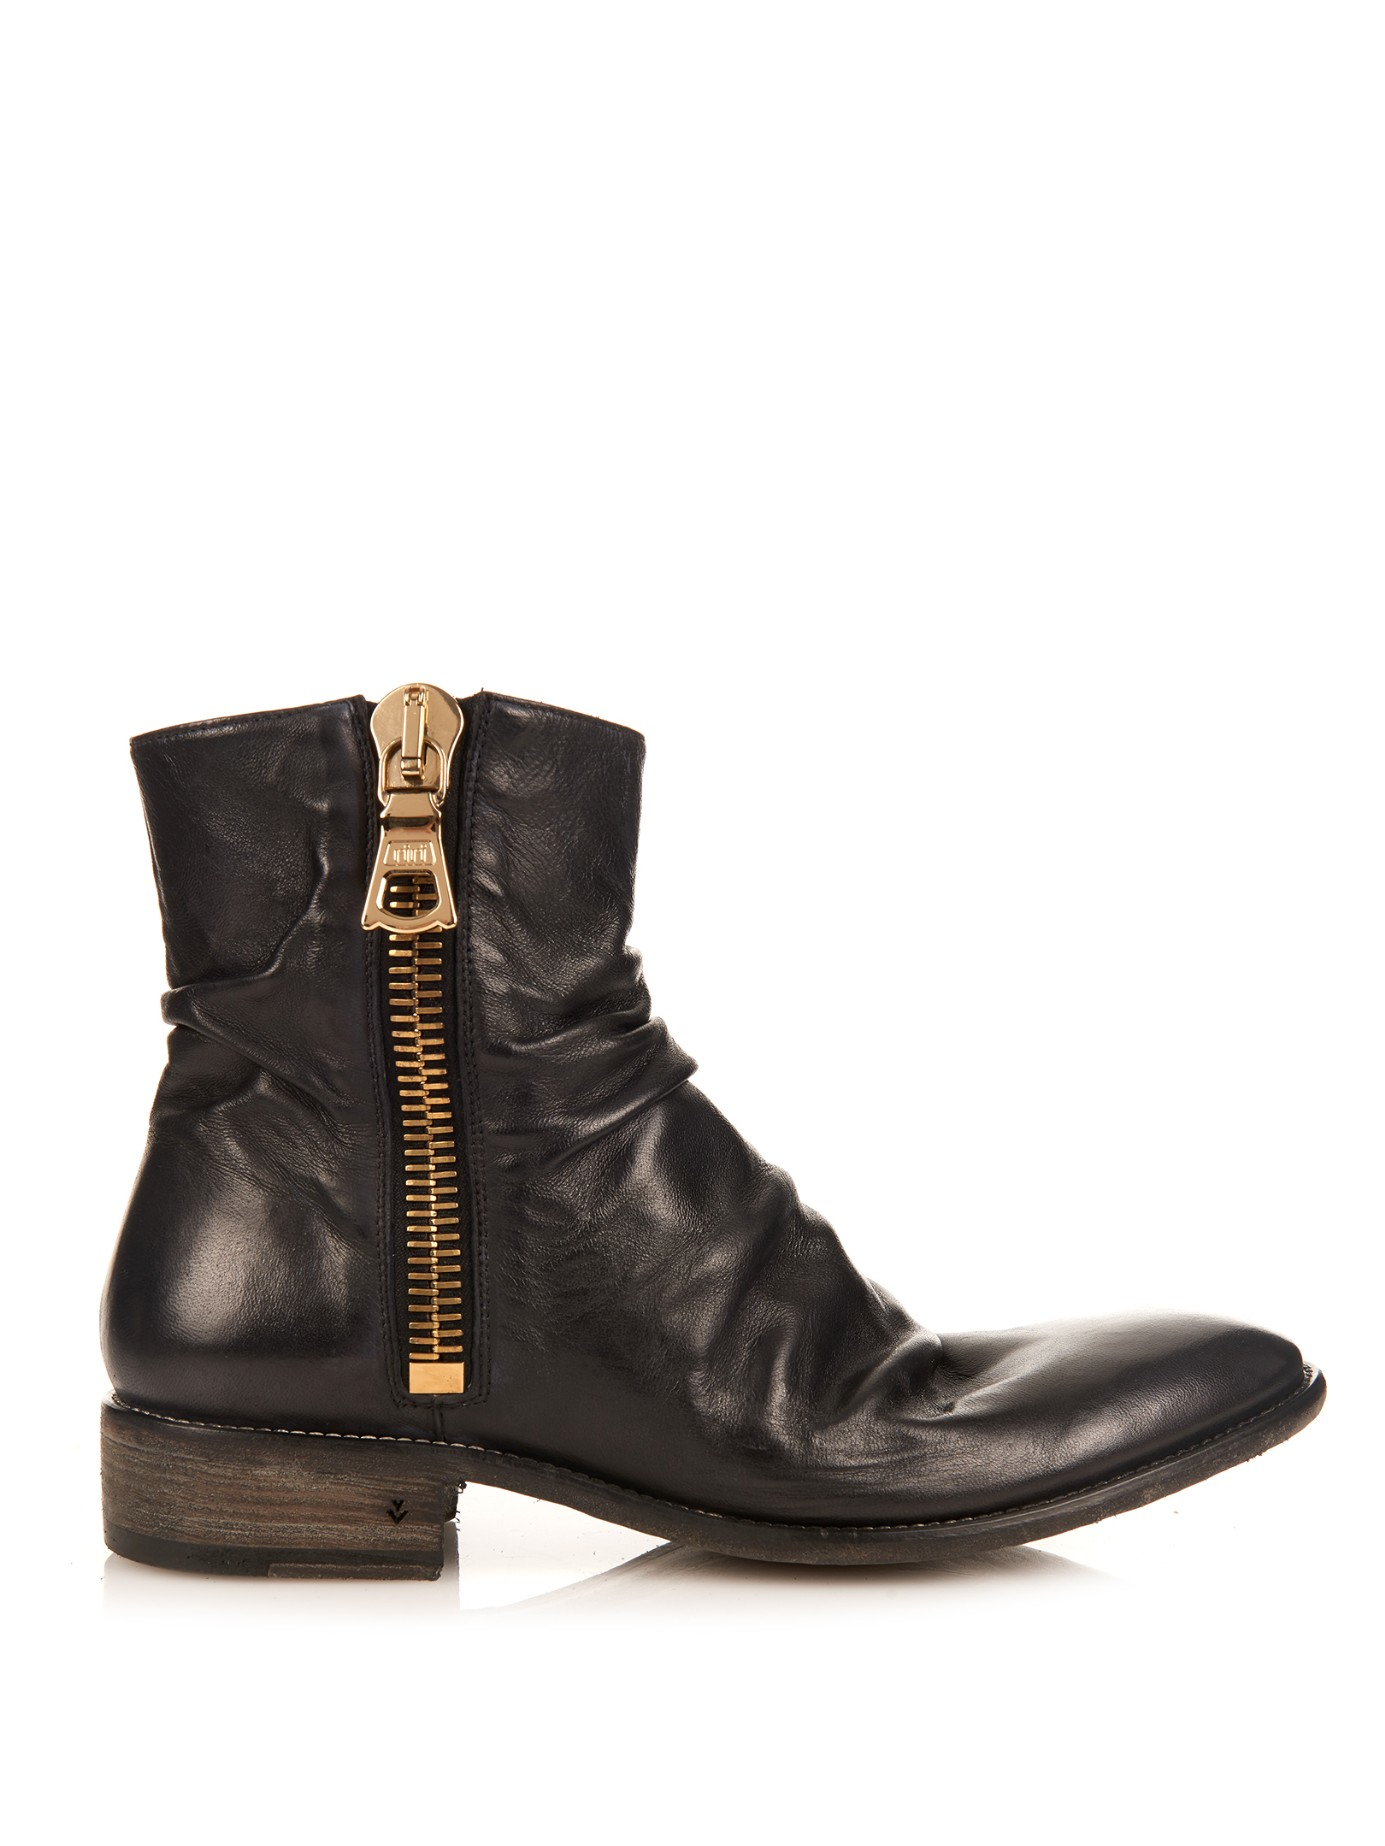 Lyst - John Varvatos Richards Wide-Zip Leather Boots in Brown for Men